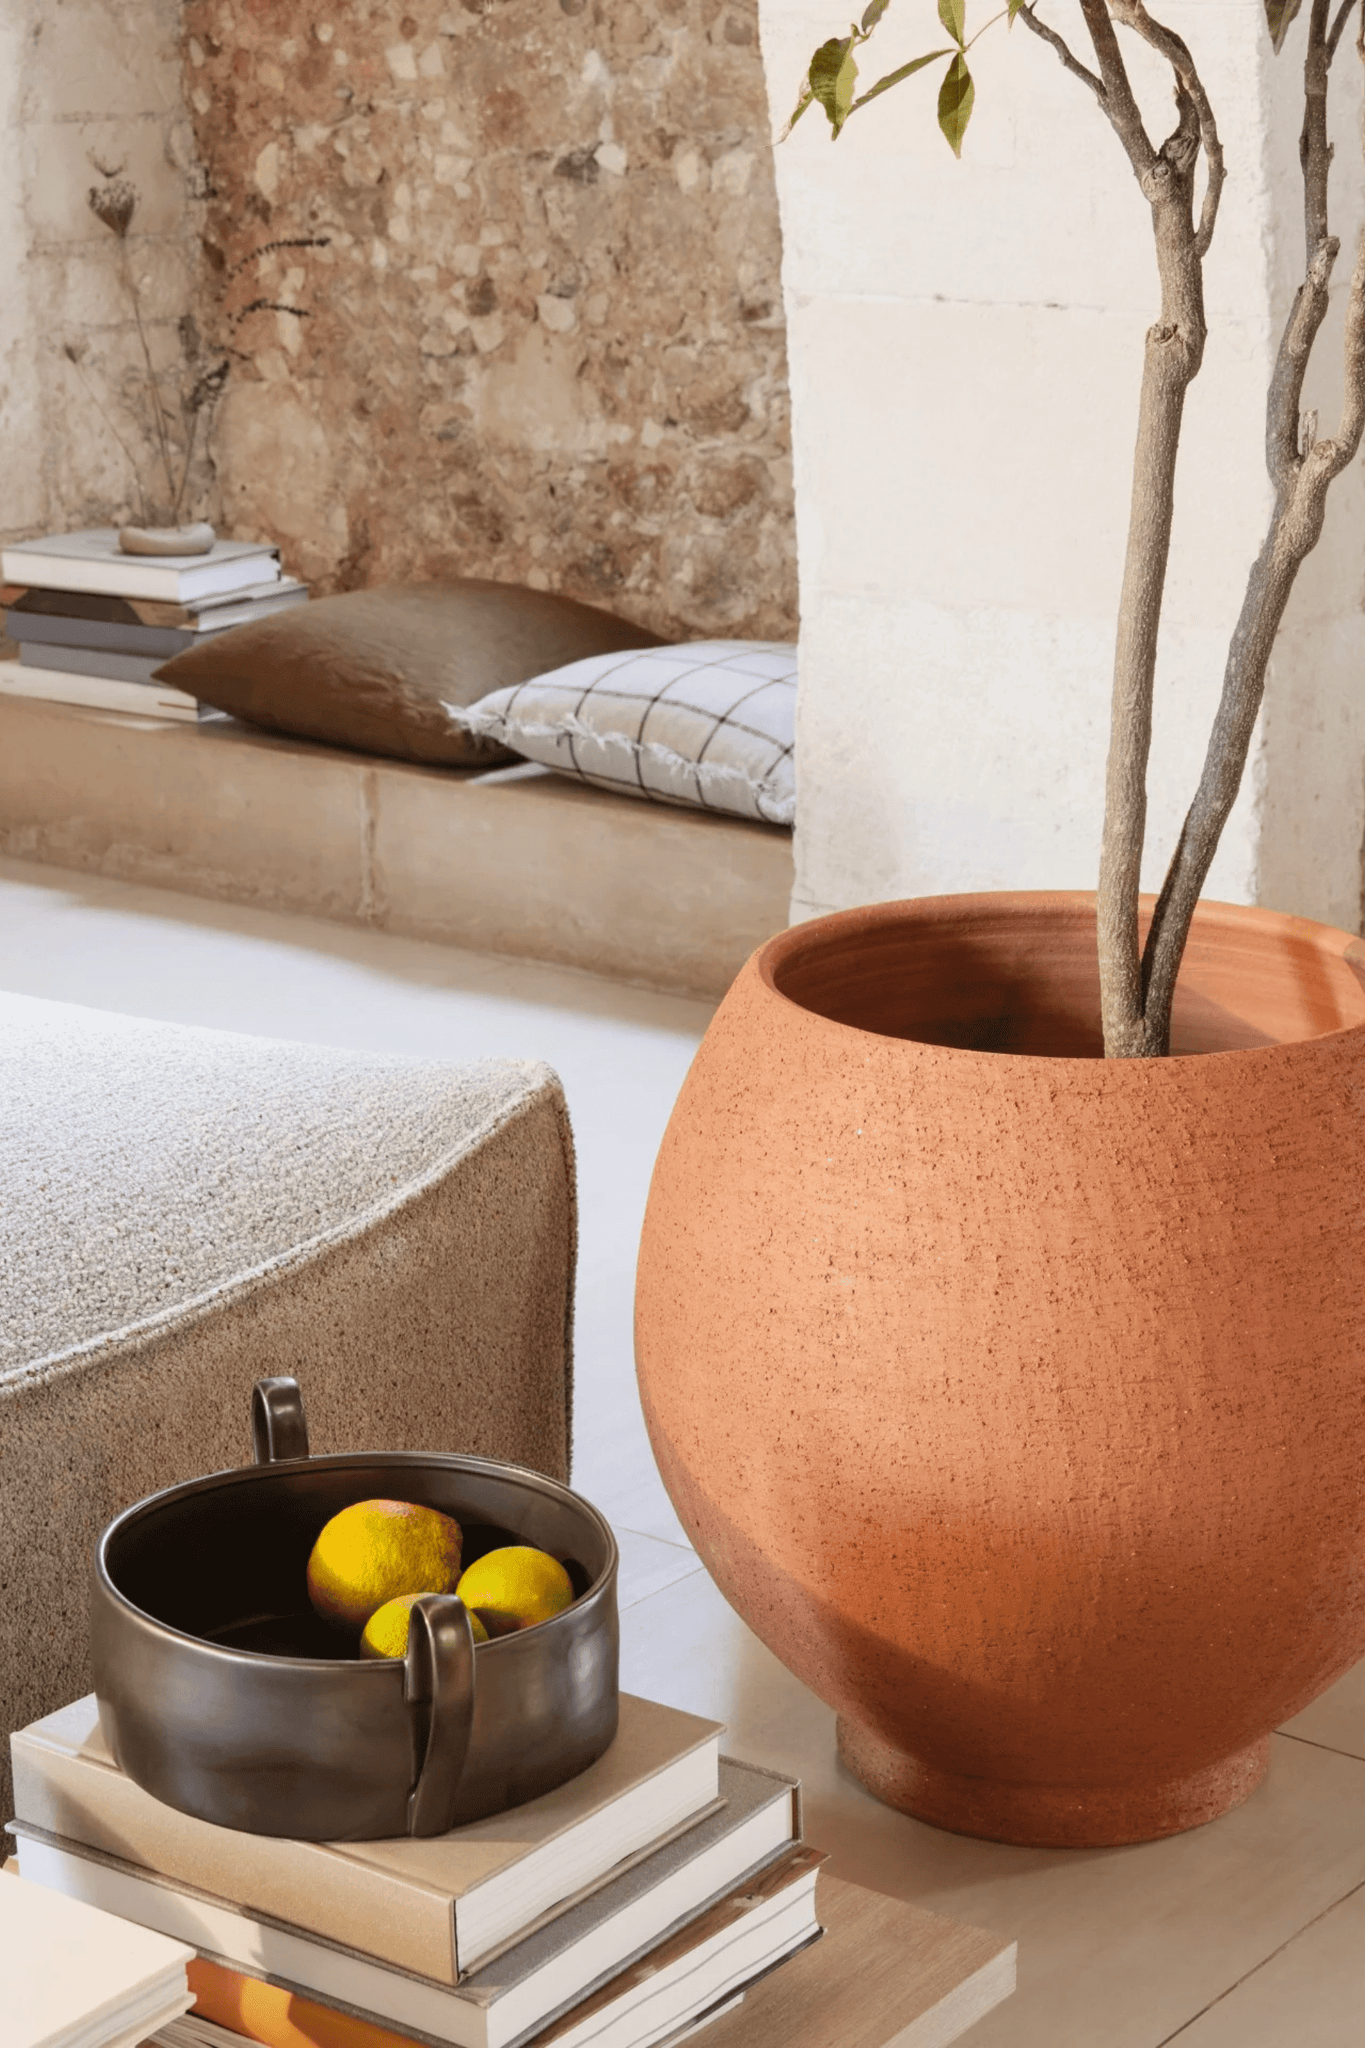 Bonne Choice Ferm Living Ando Pot - L - Terracotta